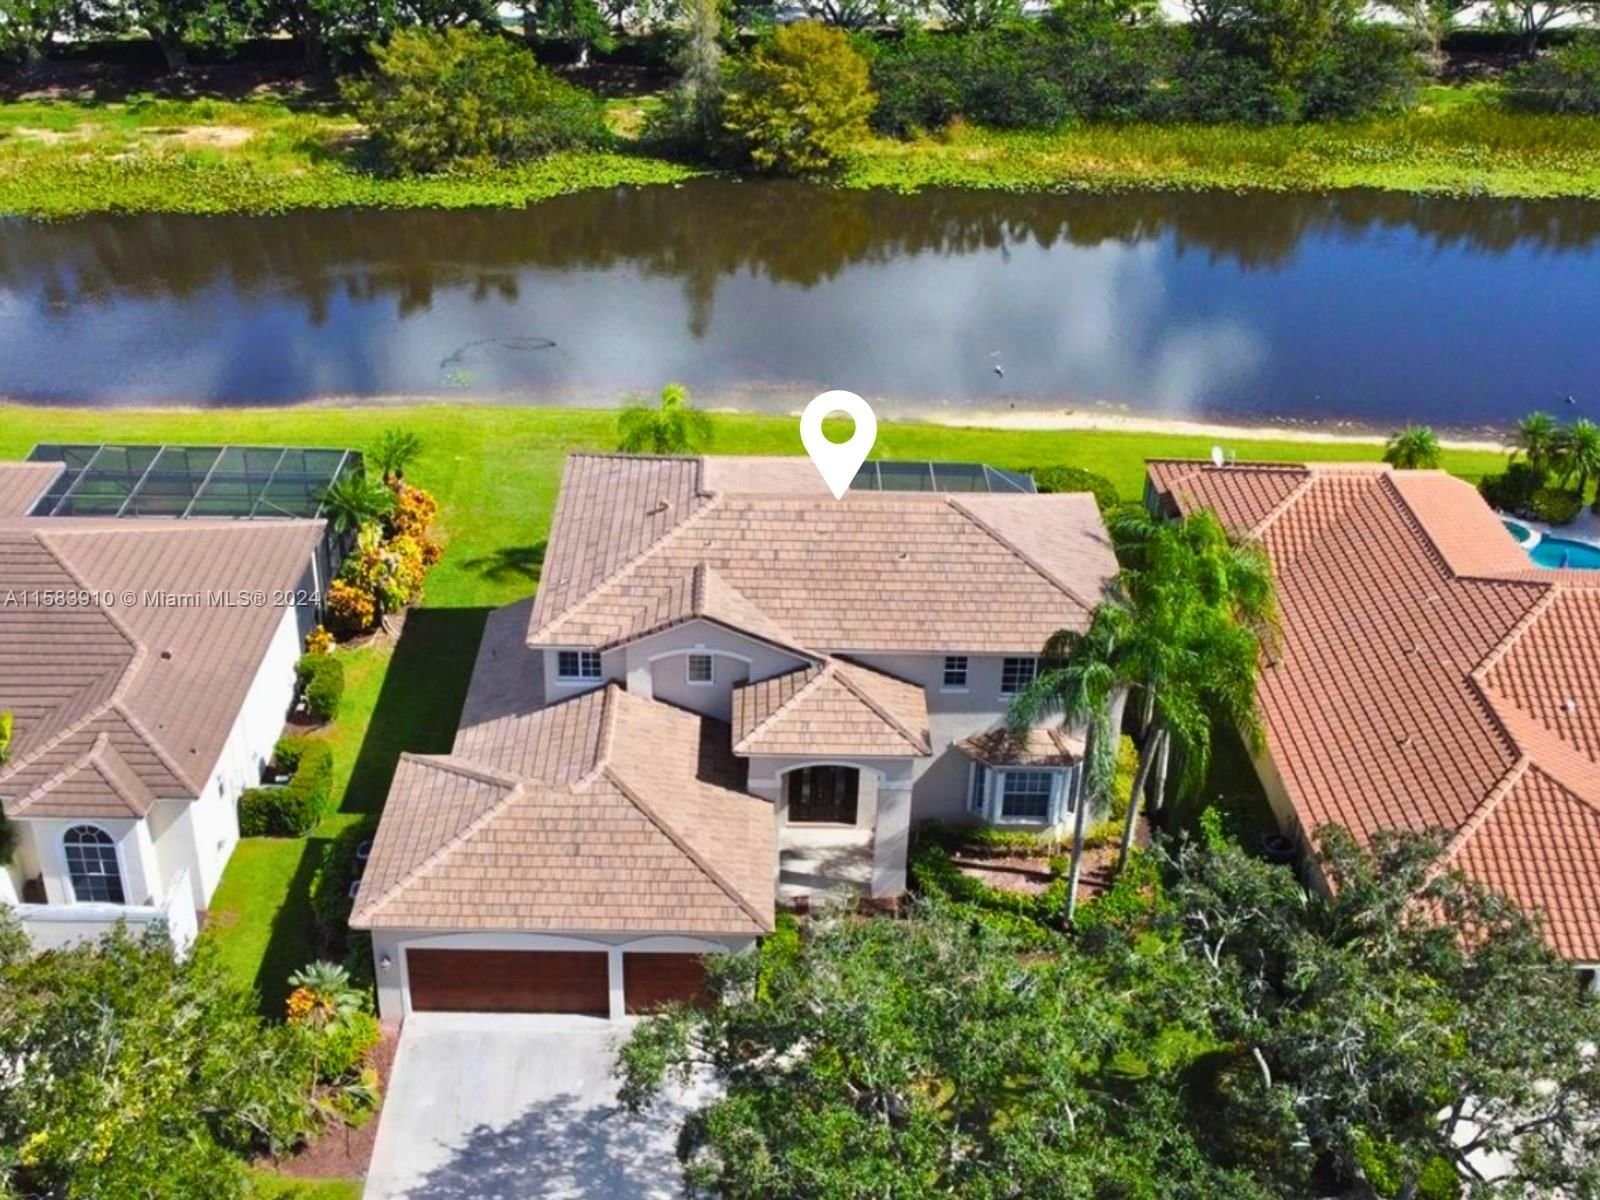 Real estate property located at 217 Landings Blvd, Broward County, THE LANDINGS, Weston, FL